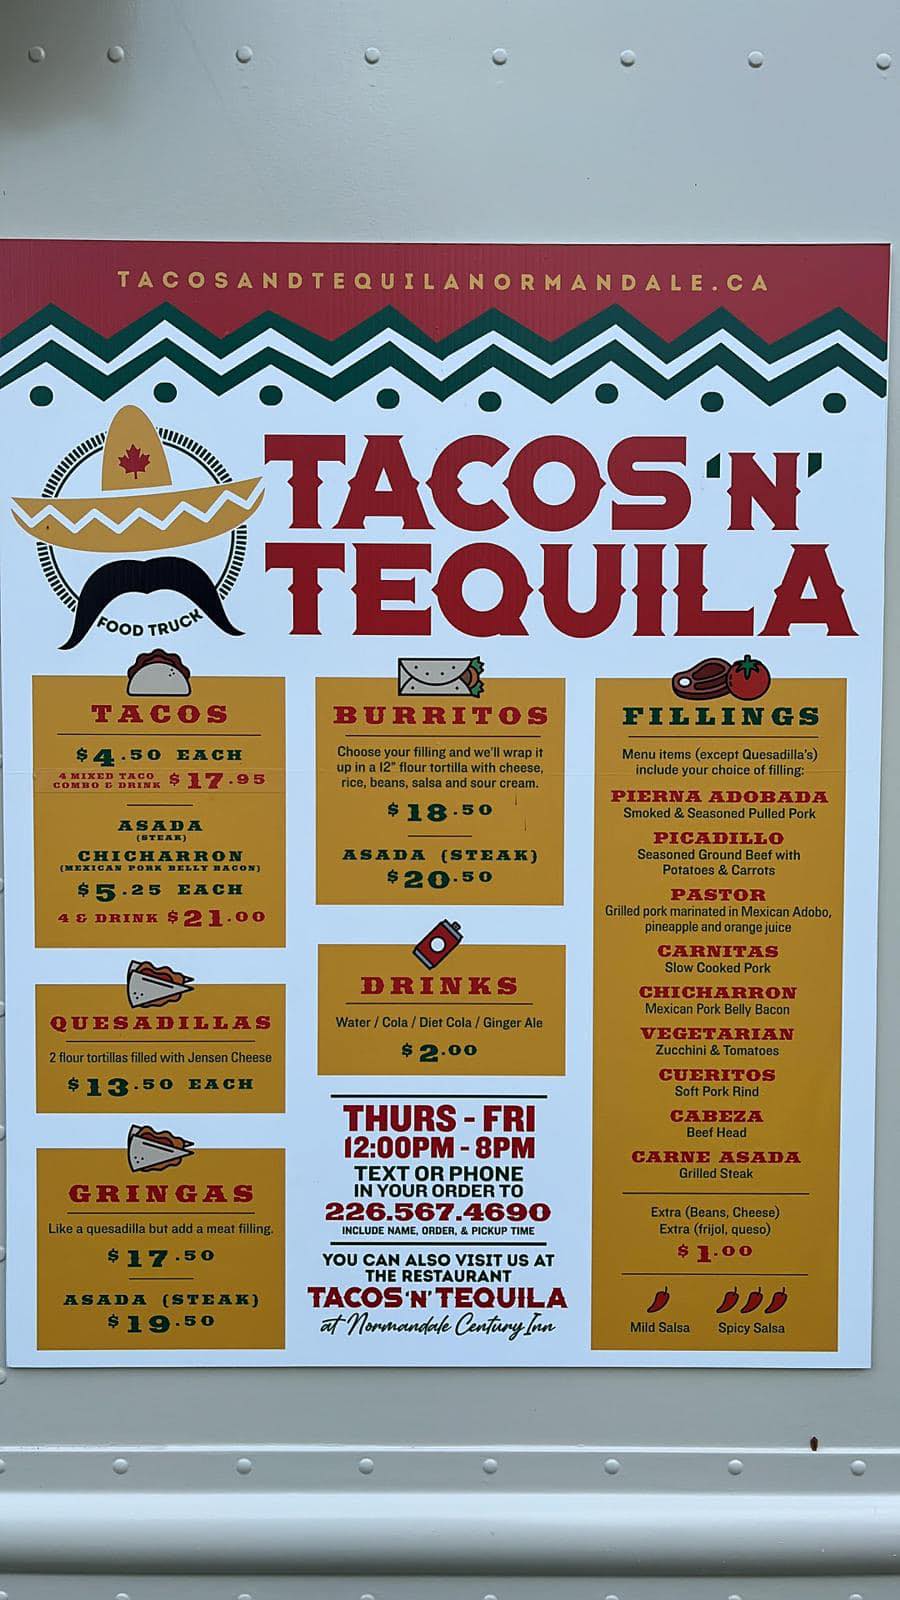 Tacos Mexico Food Truck